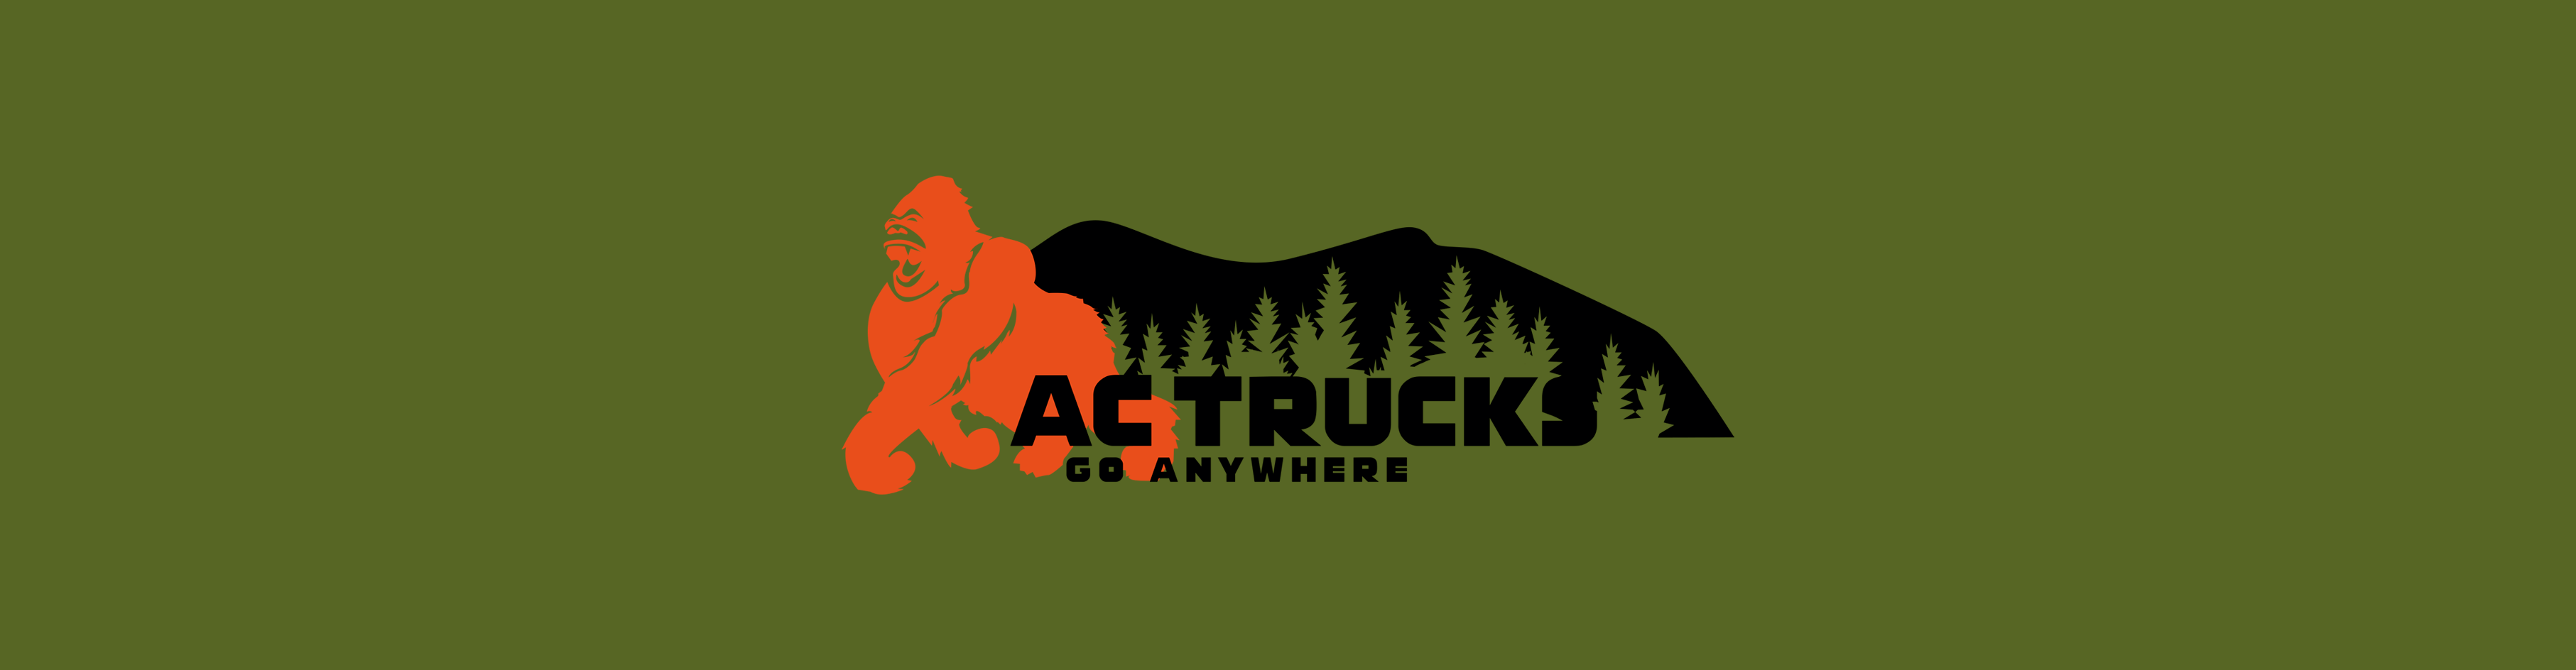 AC Trucks banneri 1